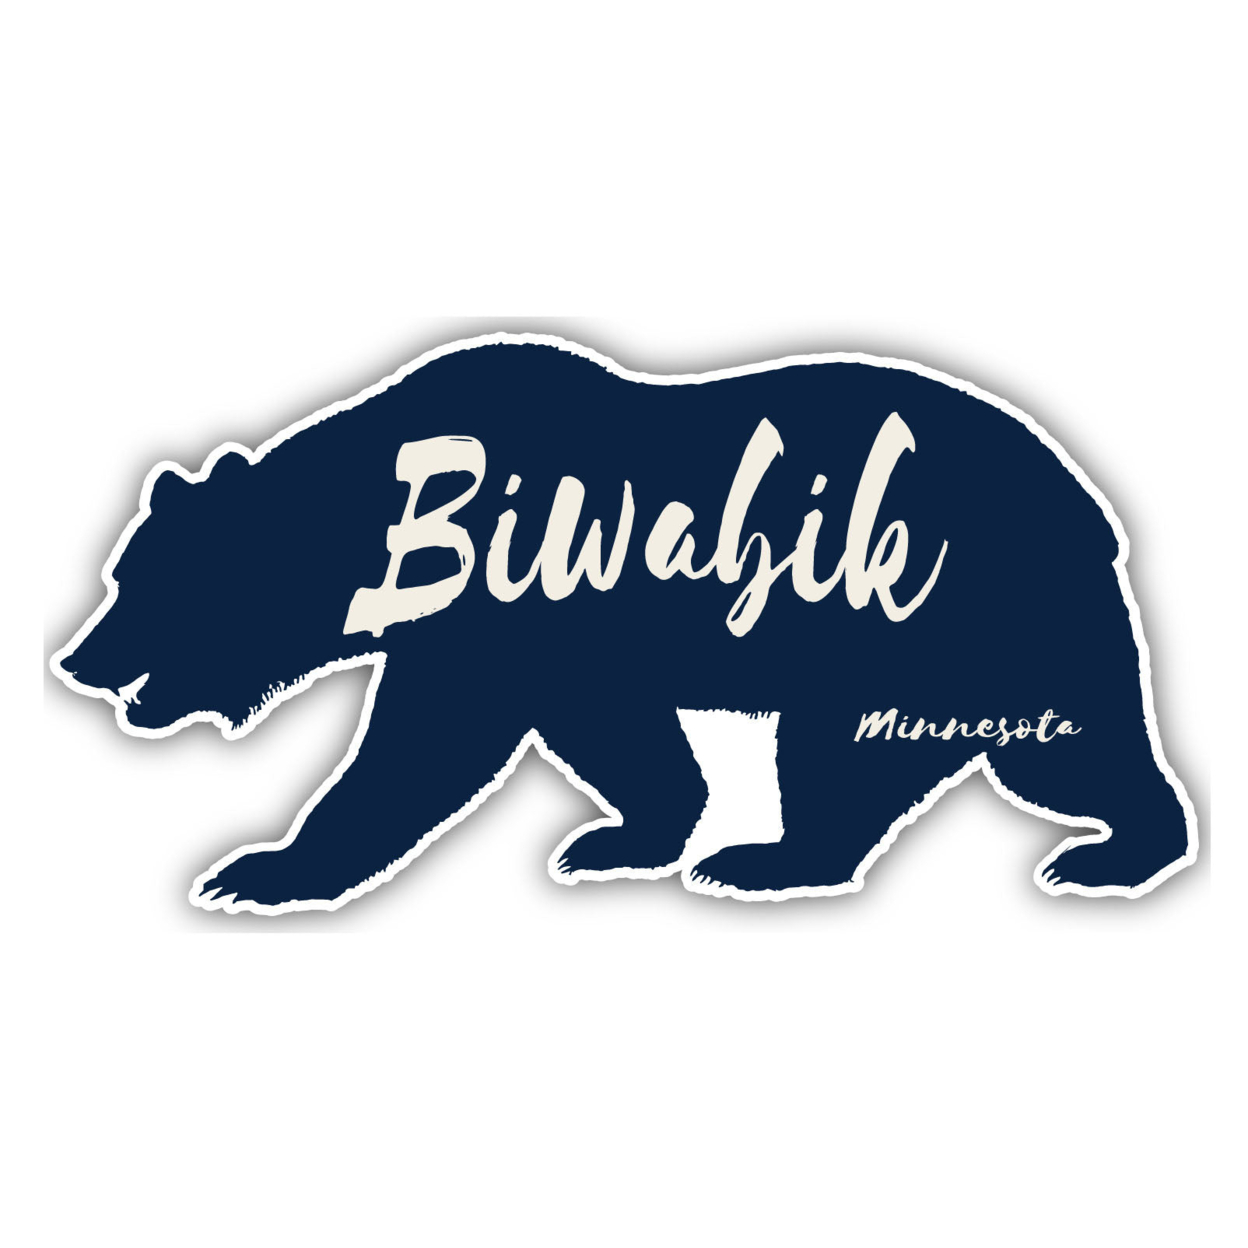 Biwabik Minnesota Souvenir Decorative Stickers (Choose Theme And Size) - 4-Pack, 10-Inch, Tent